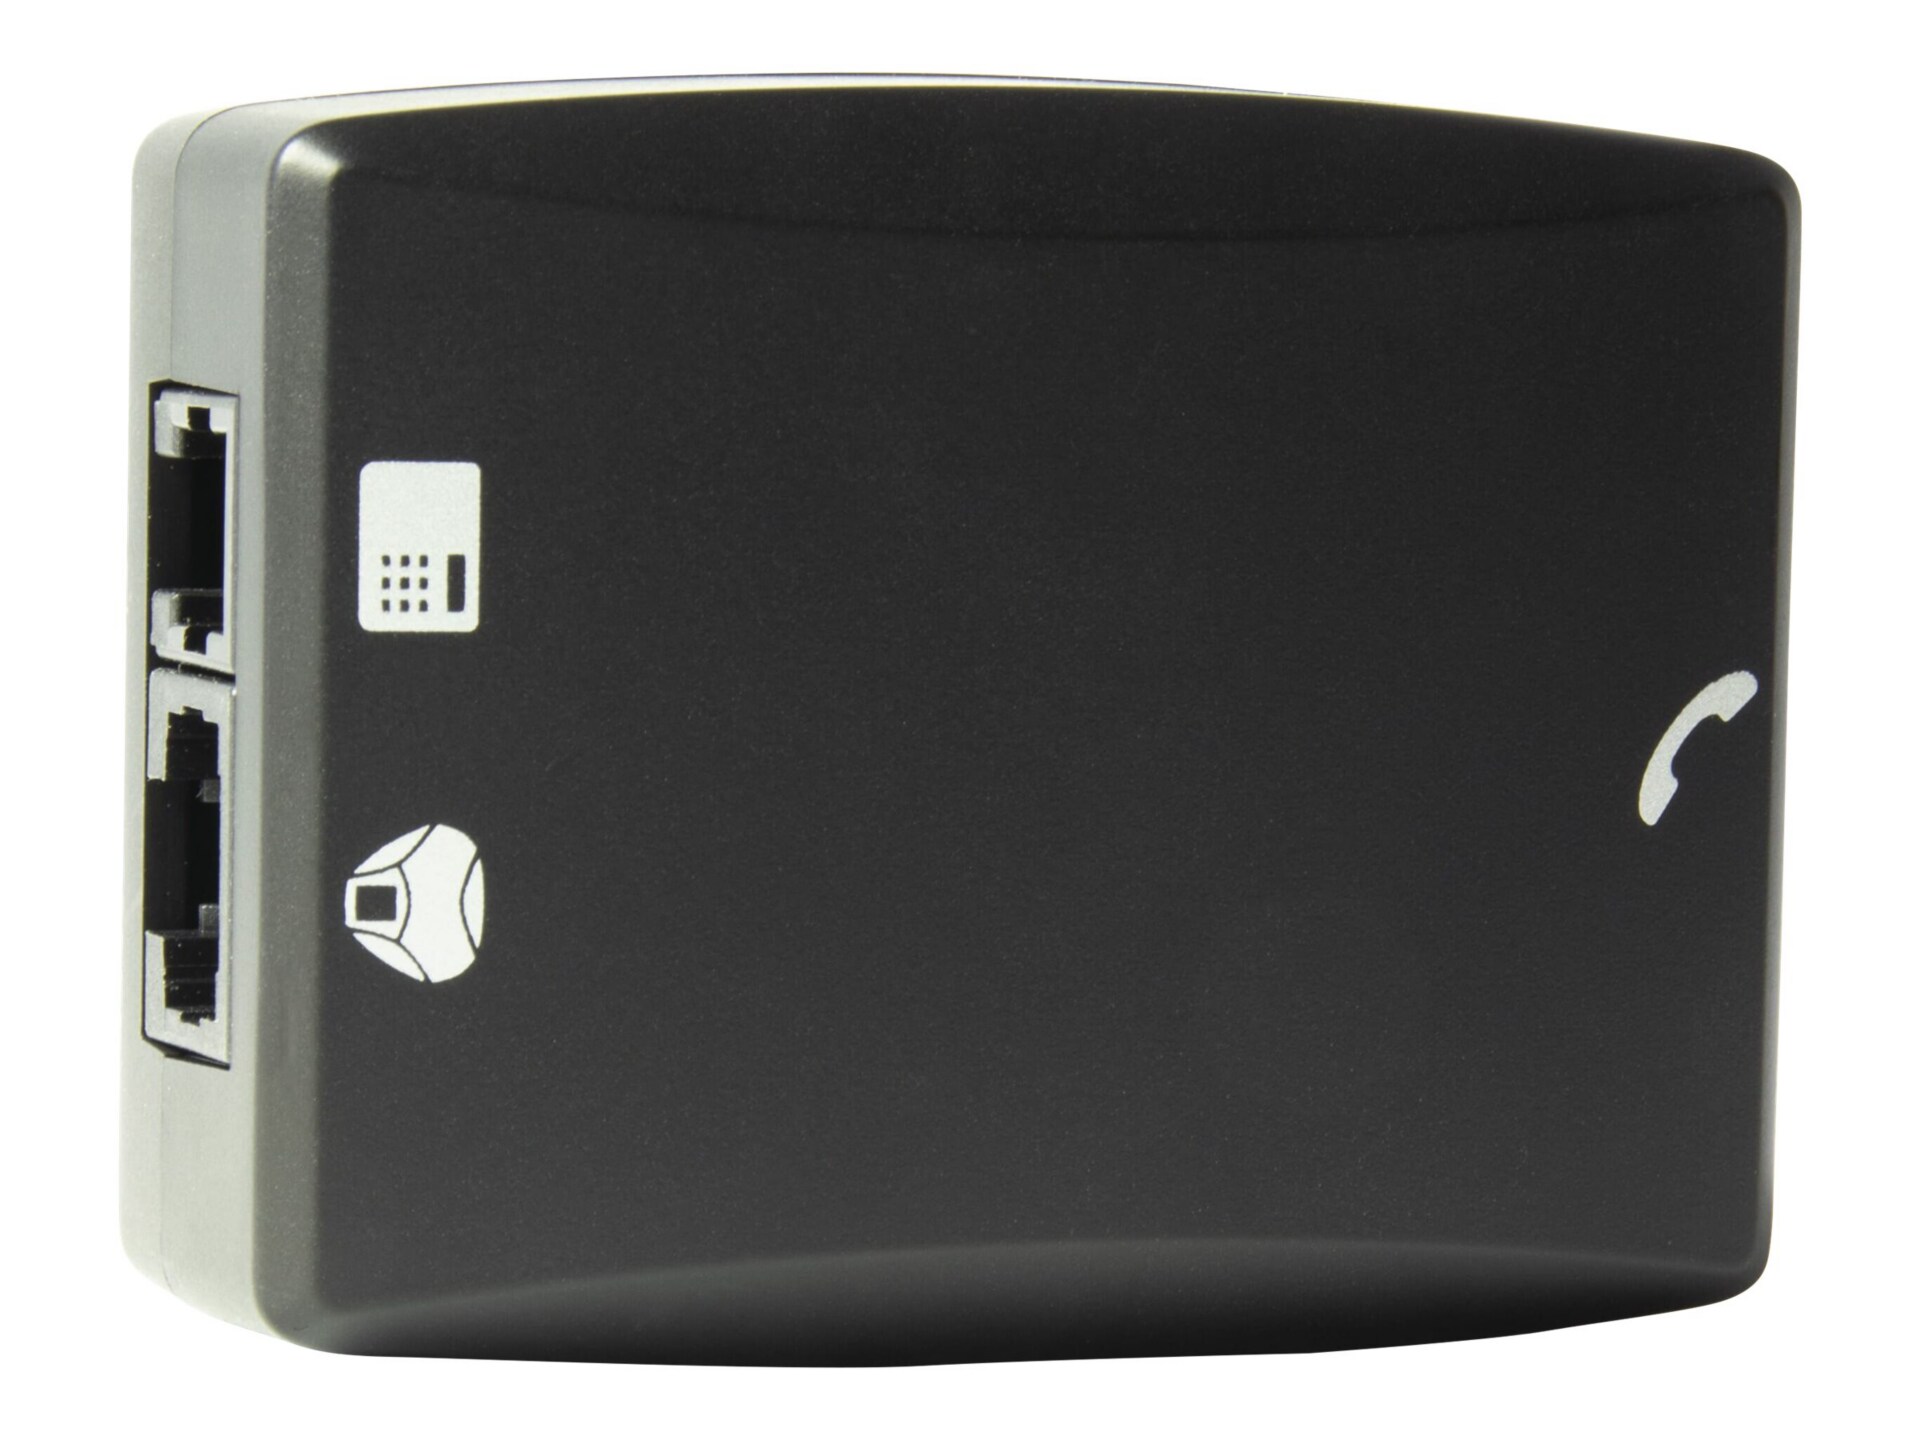 Konftel Deskphone Adapter - phone adapter